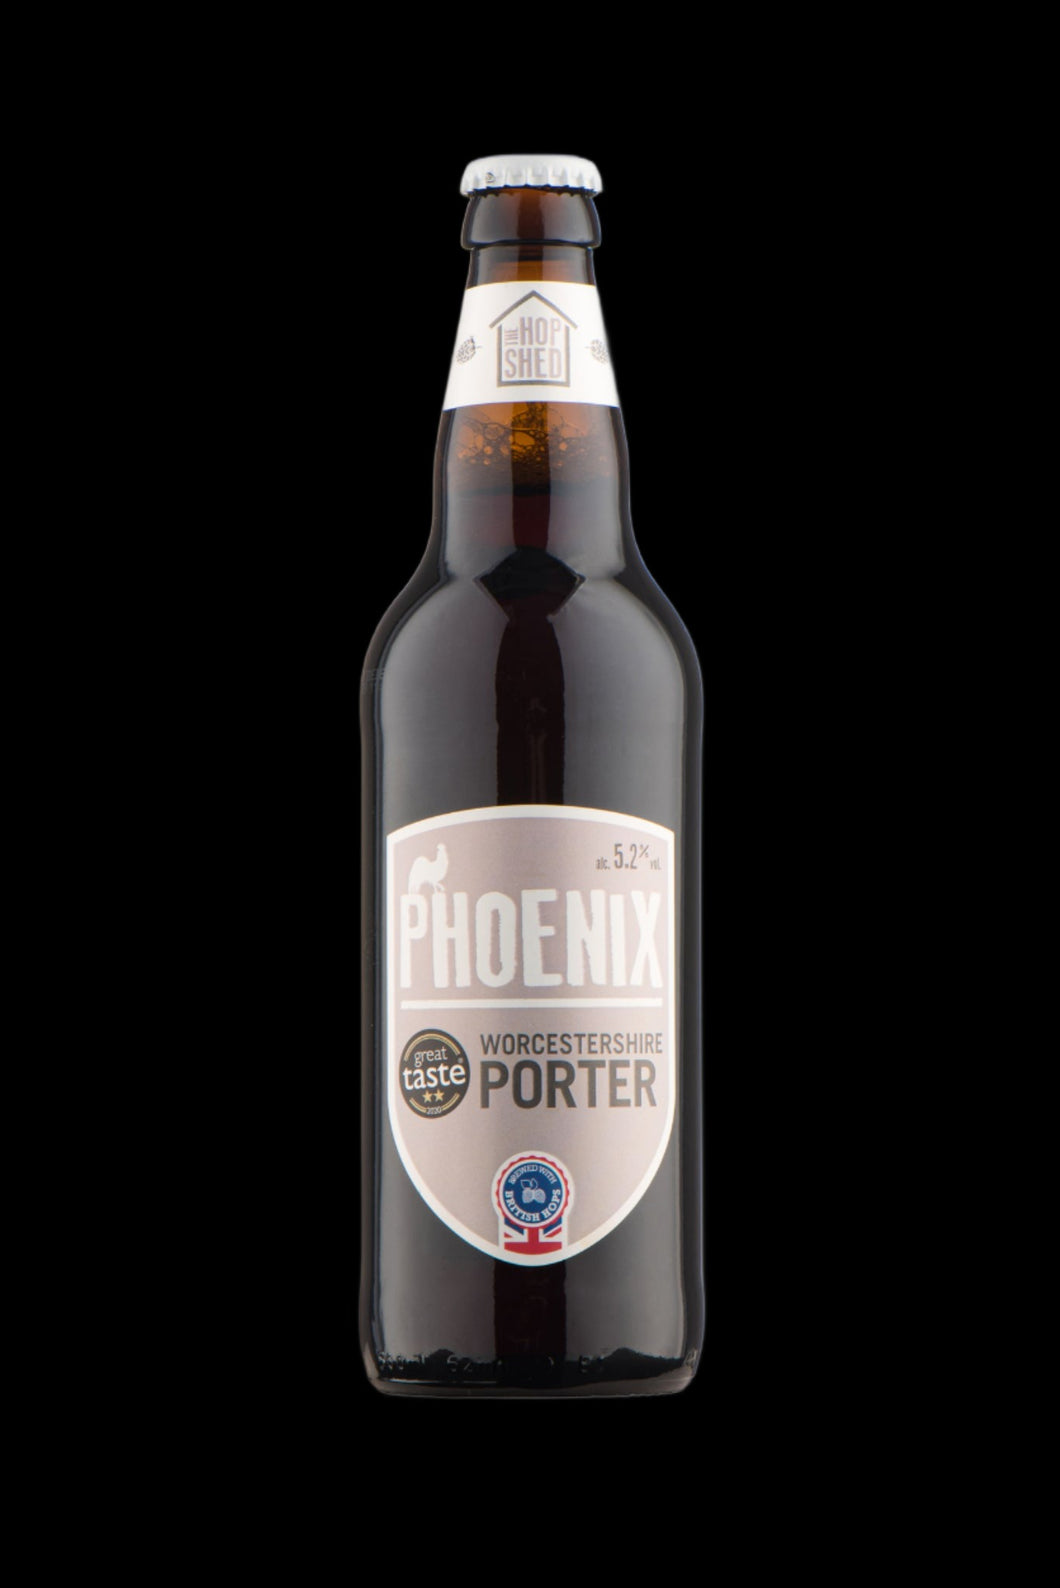 Phoenix Worcestershire Porter 5.2%  - 12 x 500ml bottles